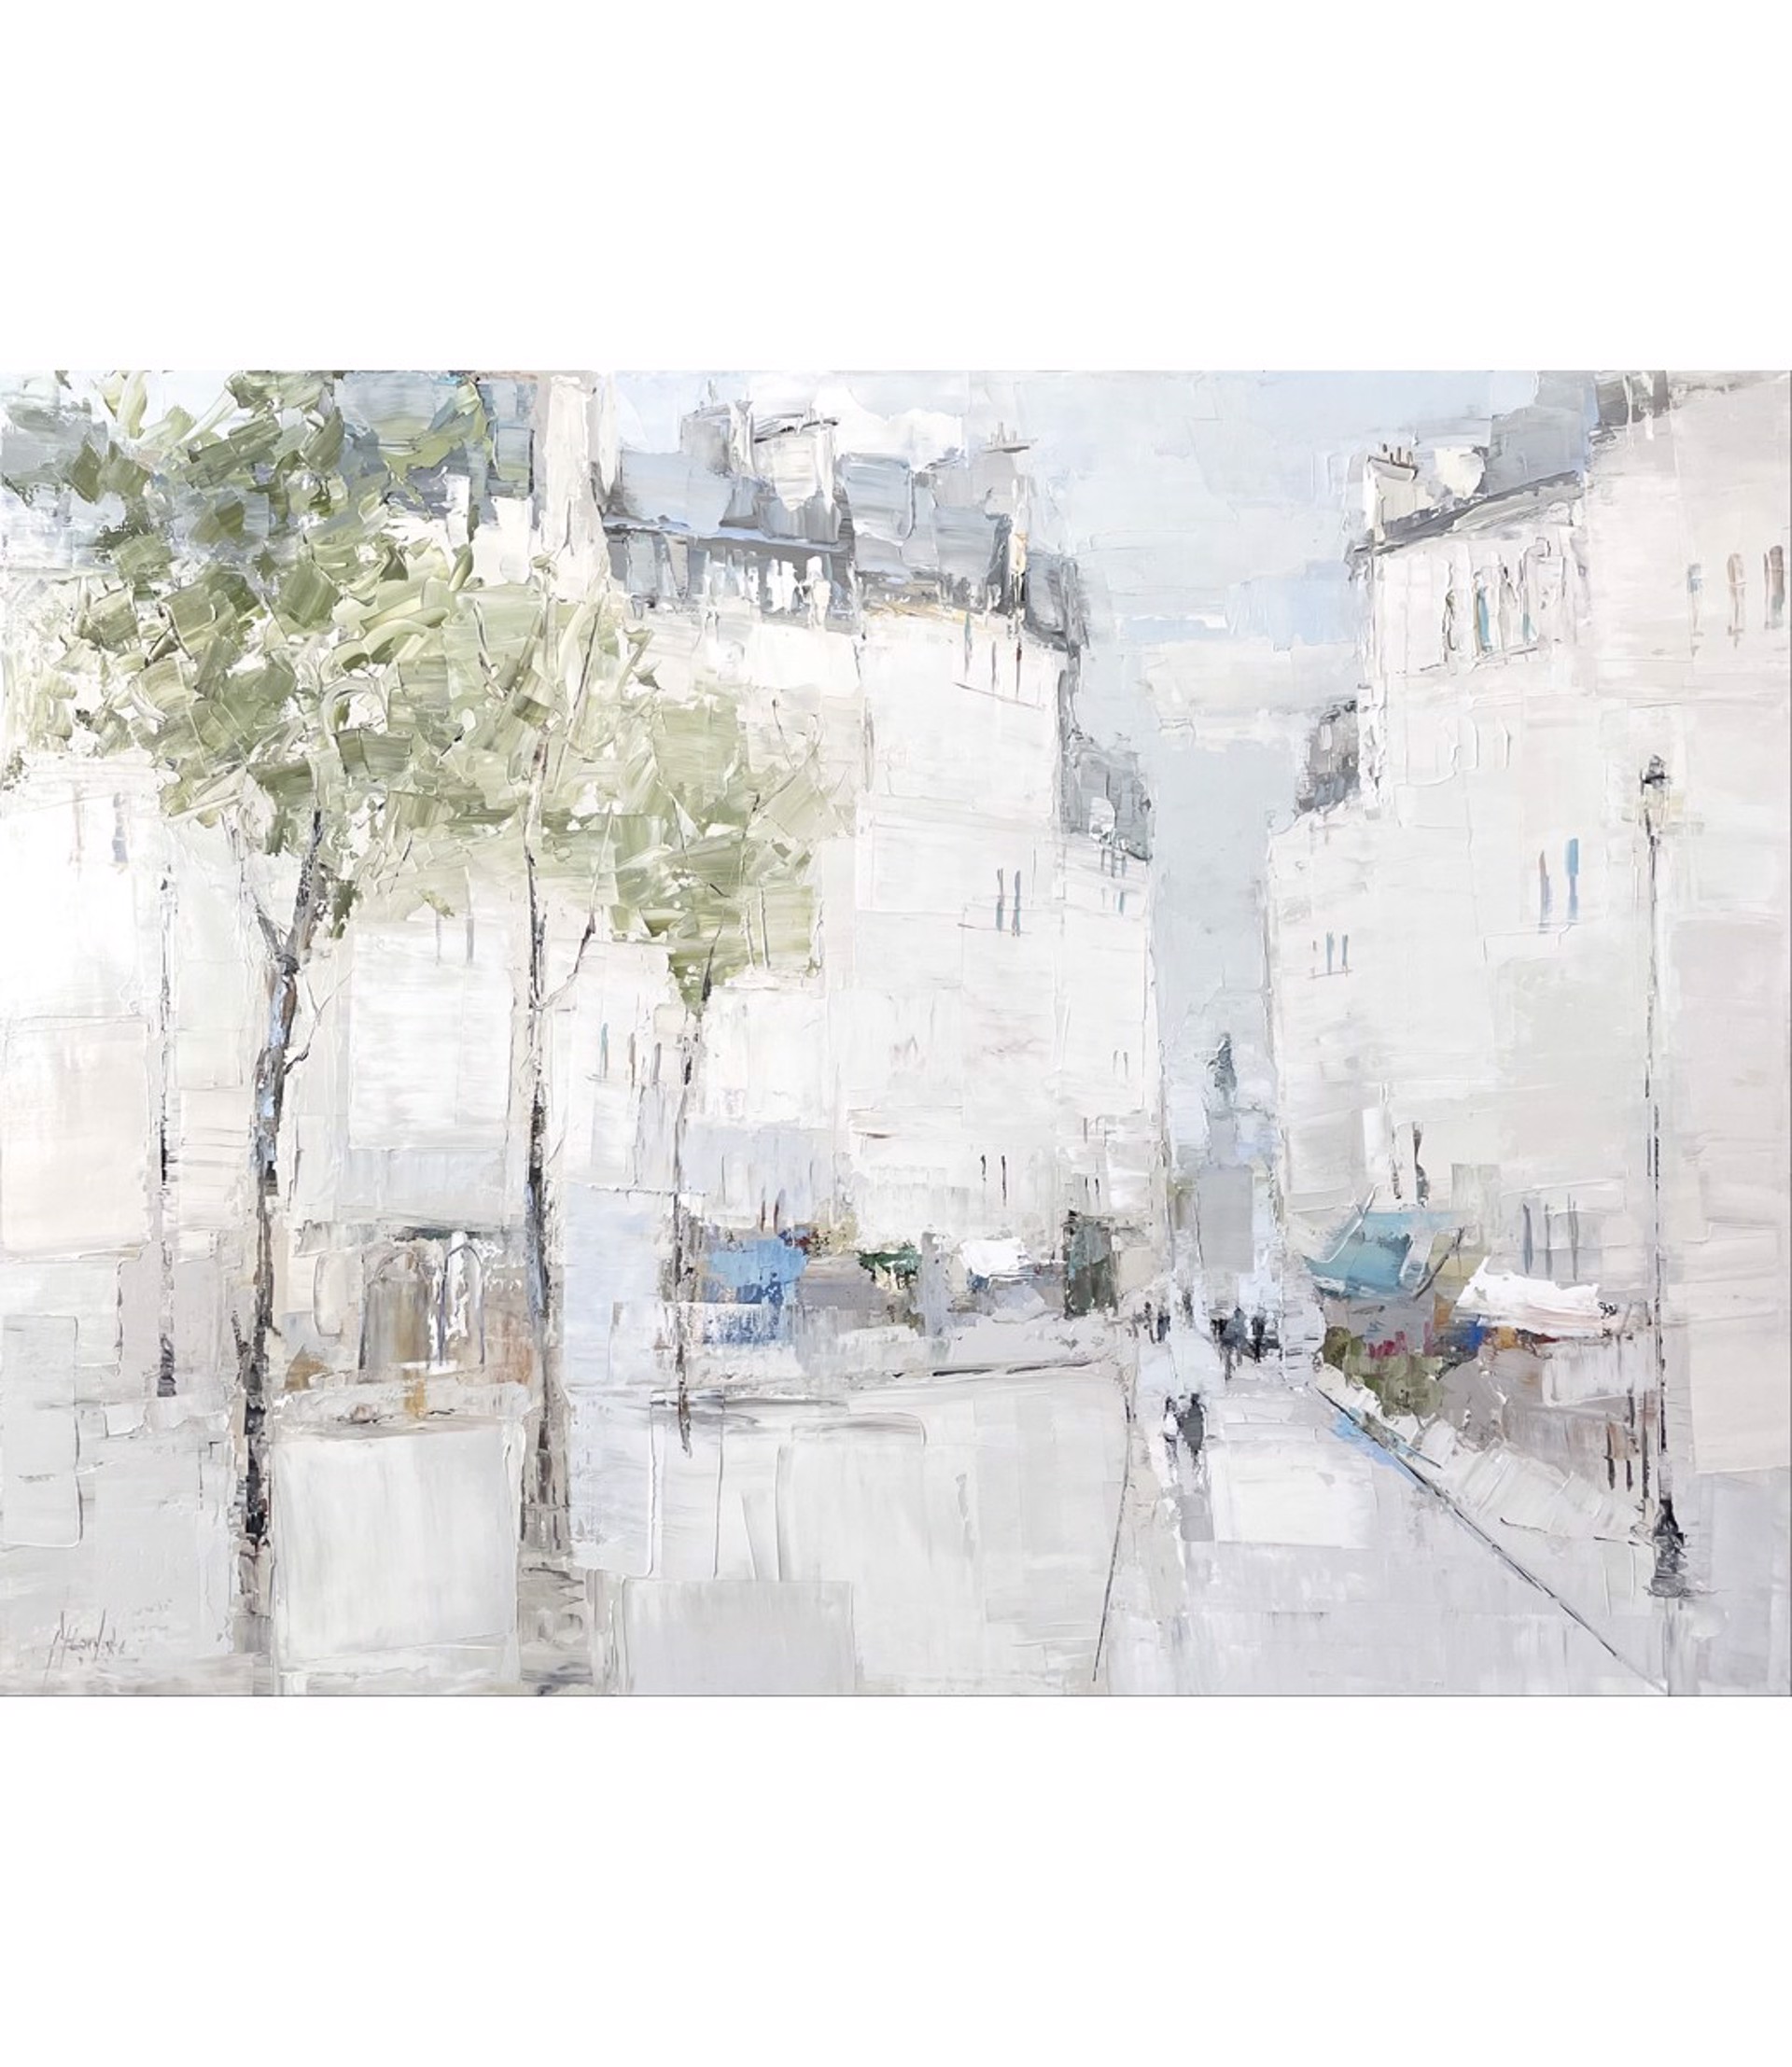 Place Dauphine, Paris by Barbara Flowers